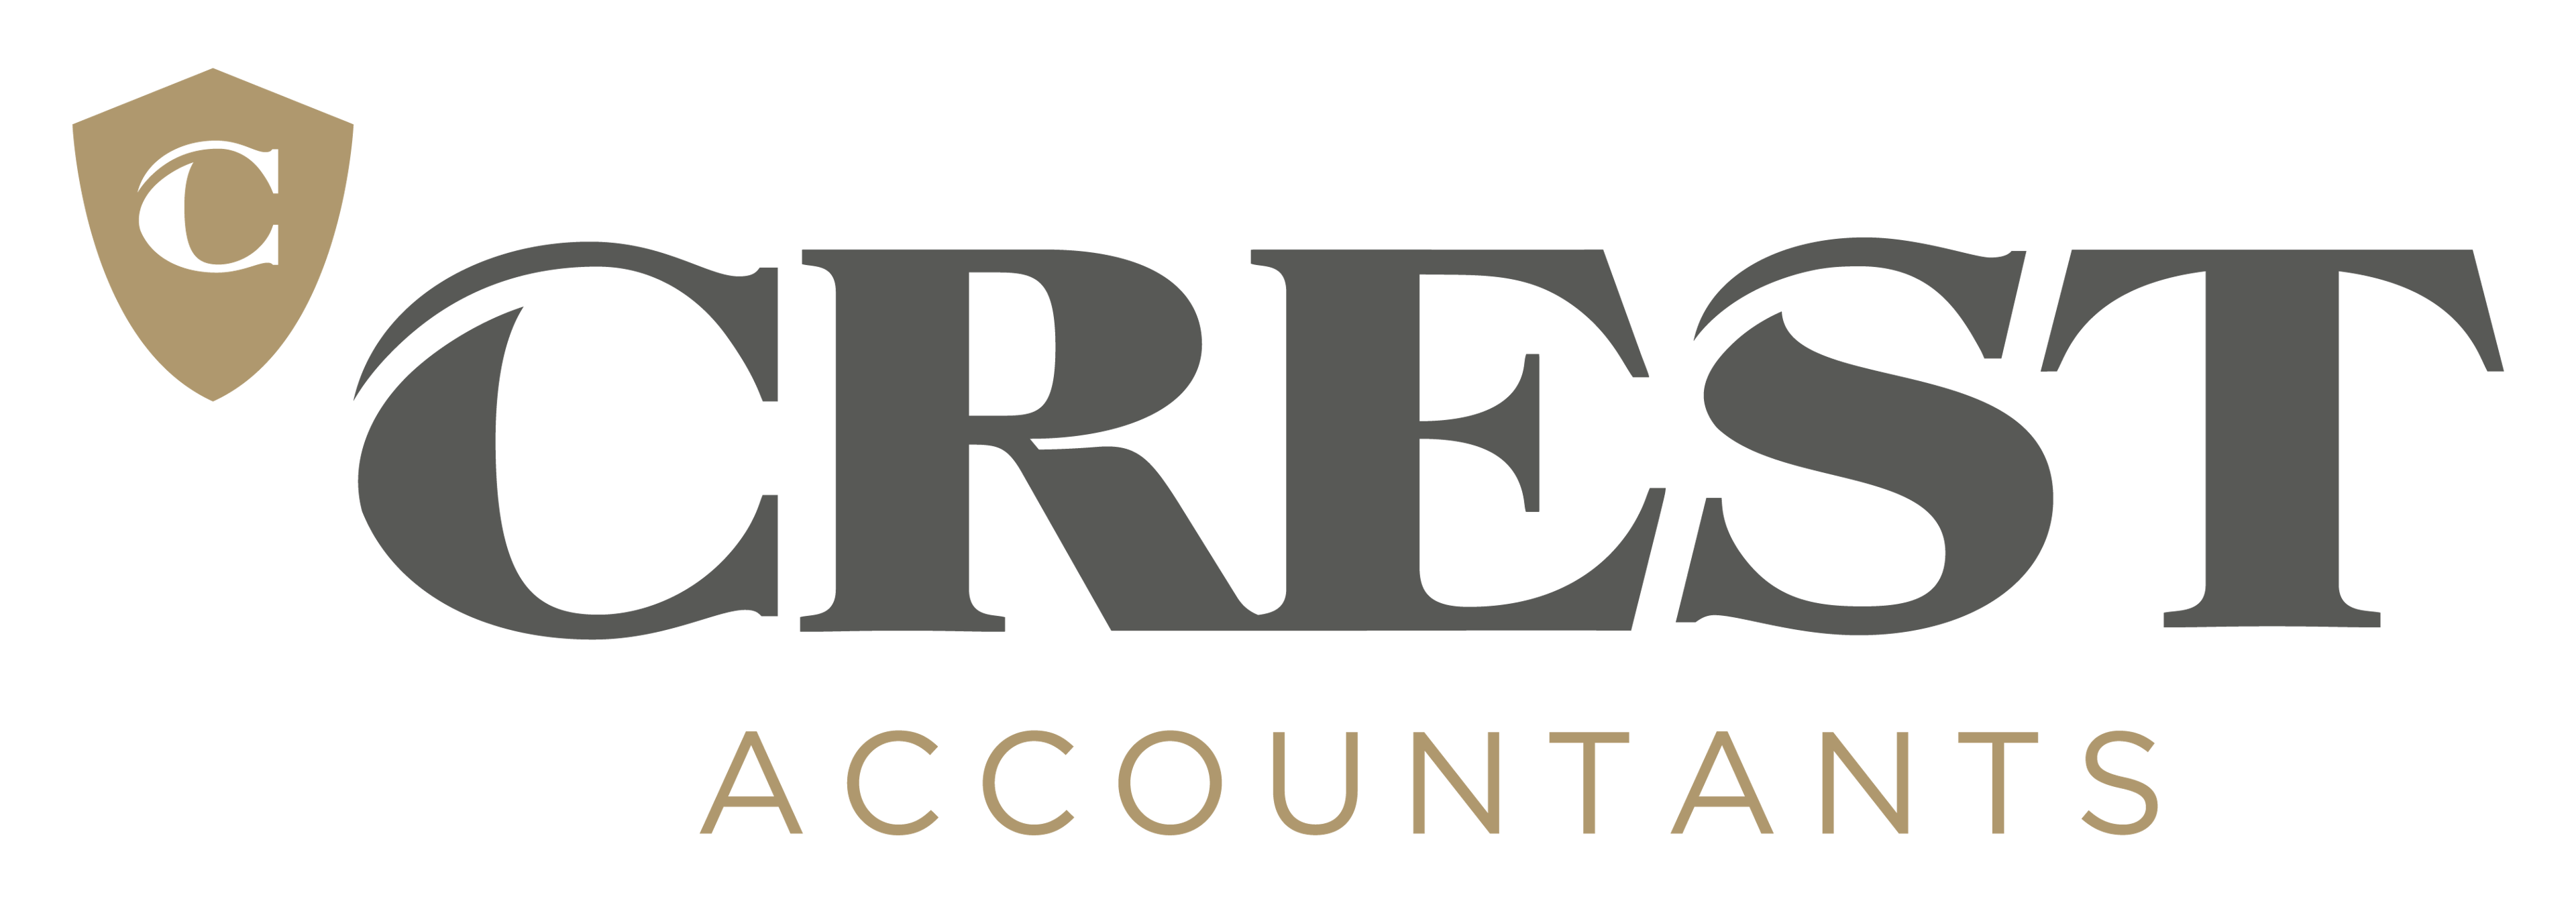 Crest Accountants logo